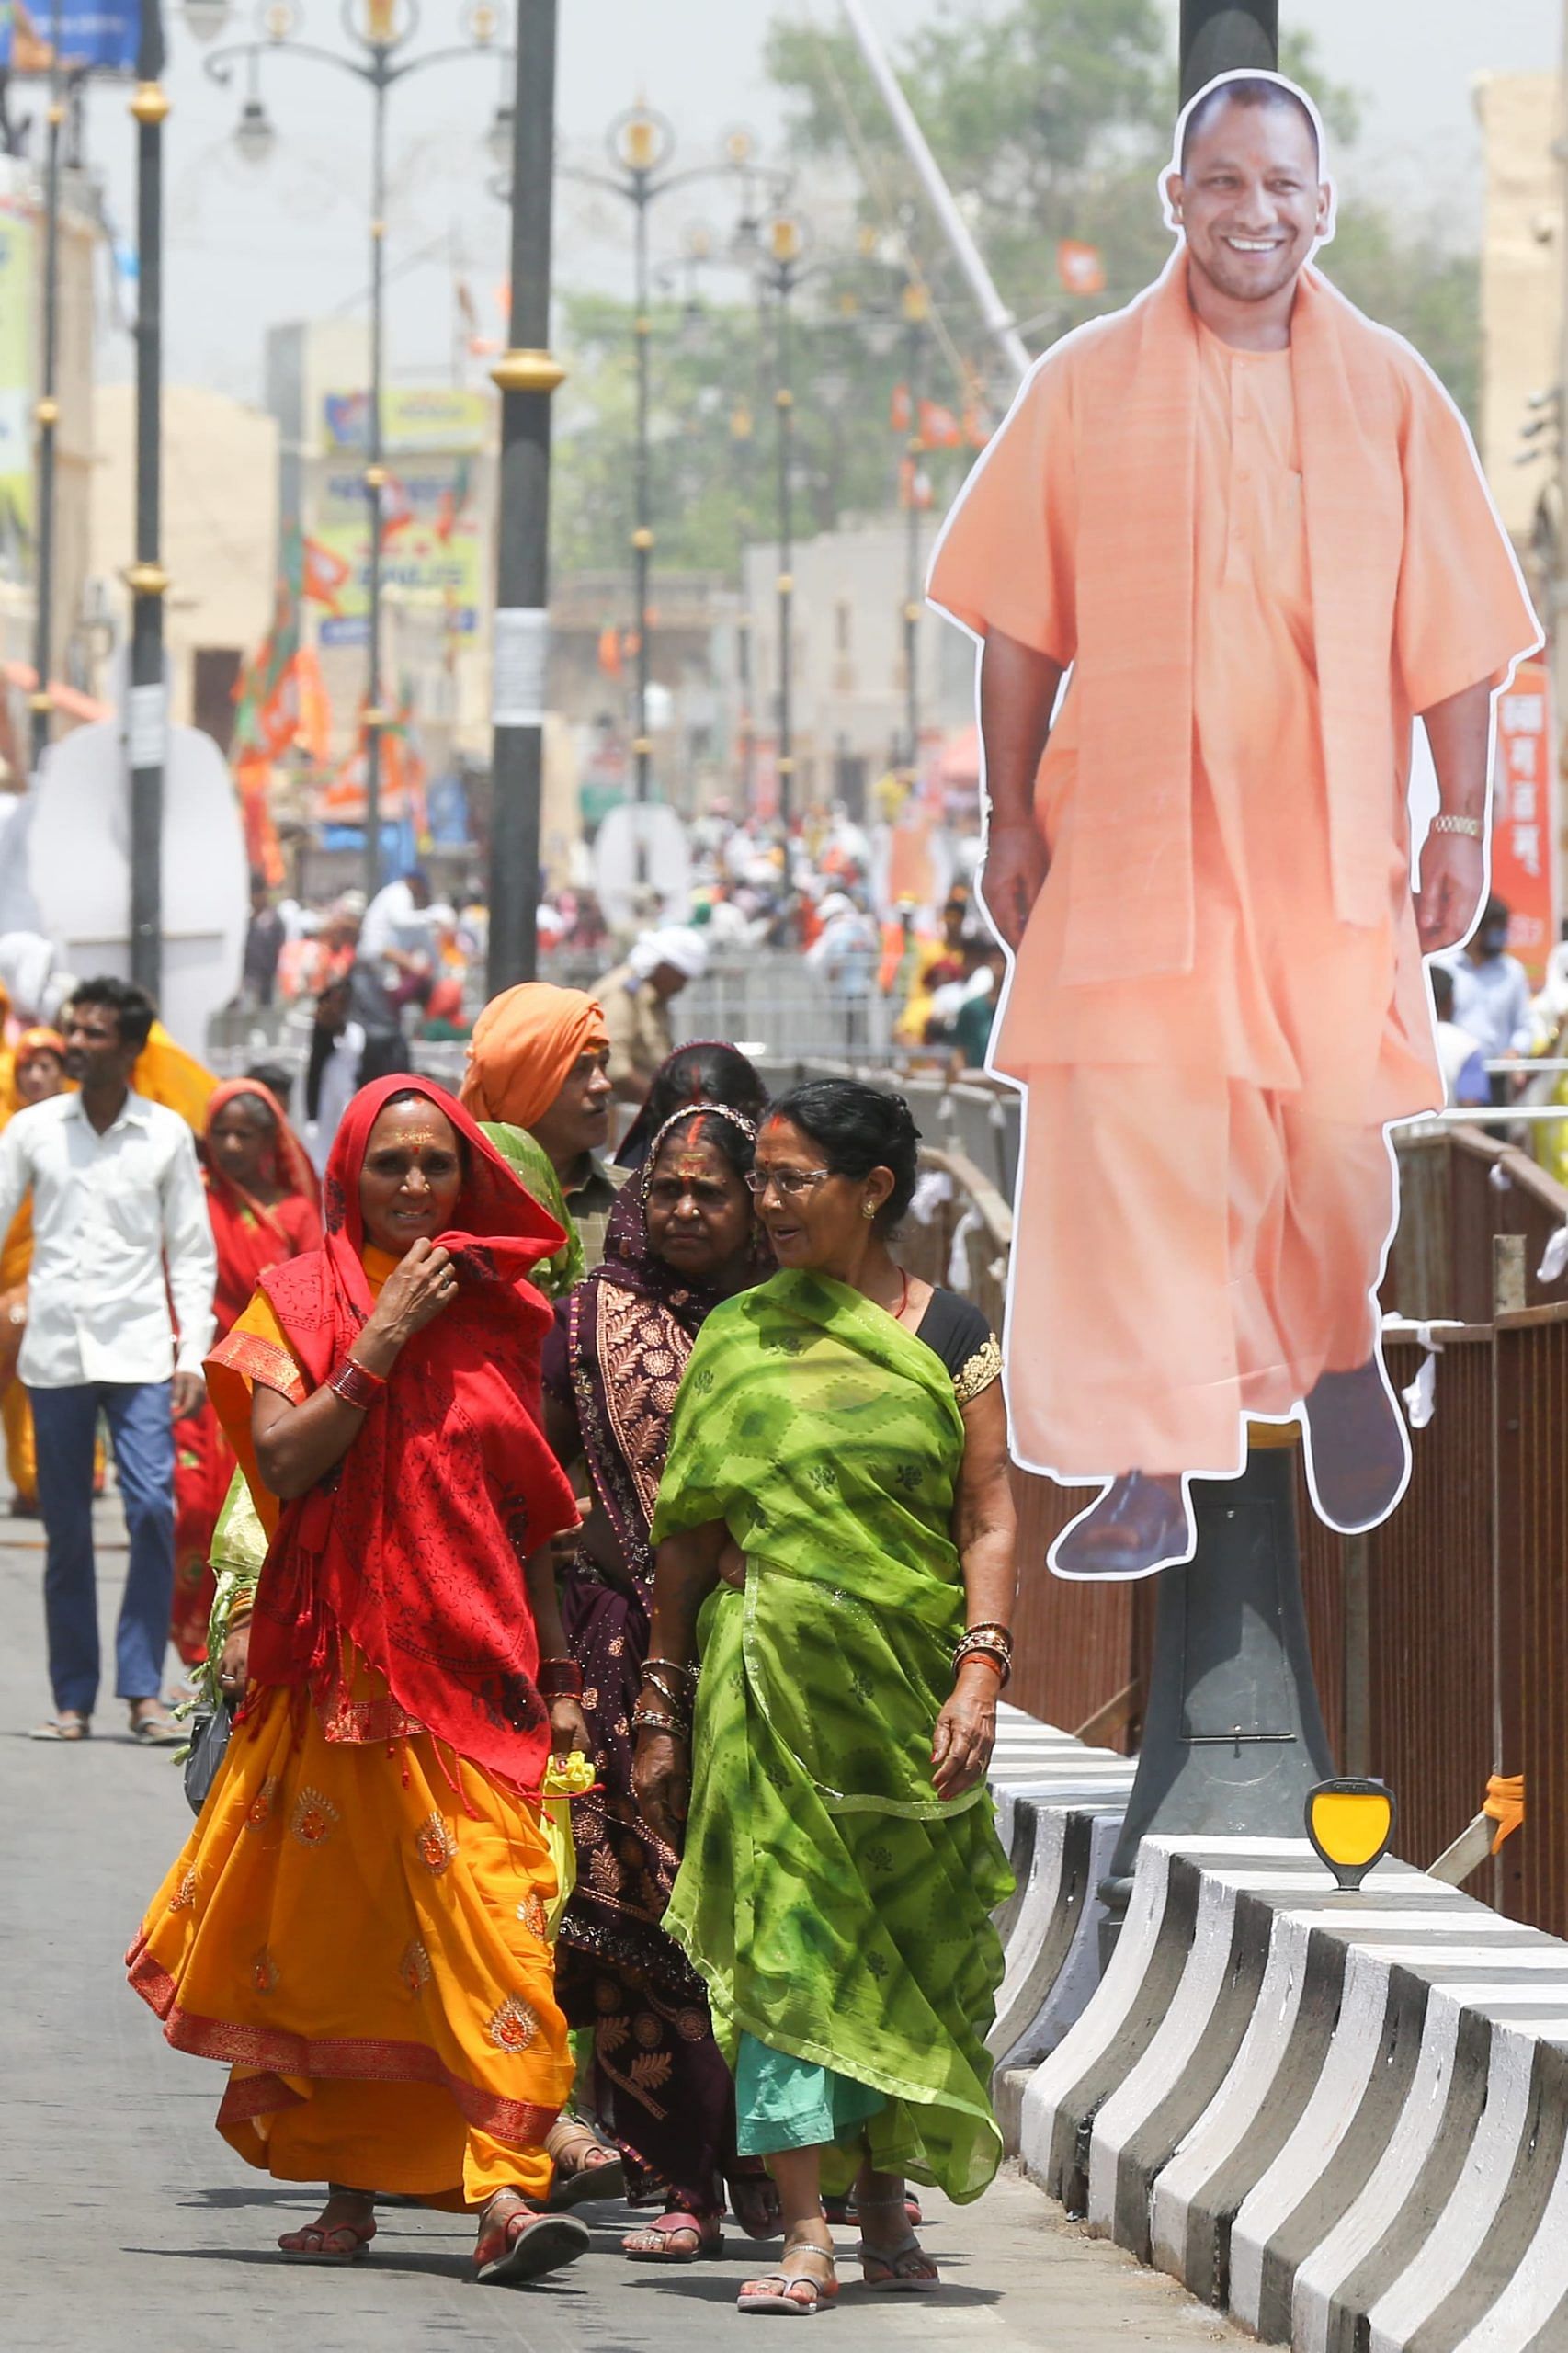 2 km roadshow, obeisance to ram lalla, sea of supporters — pm modi’s blockbuster procession in ayodhya